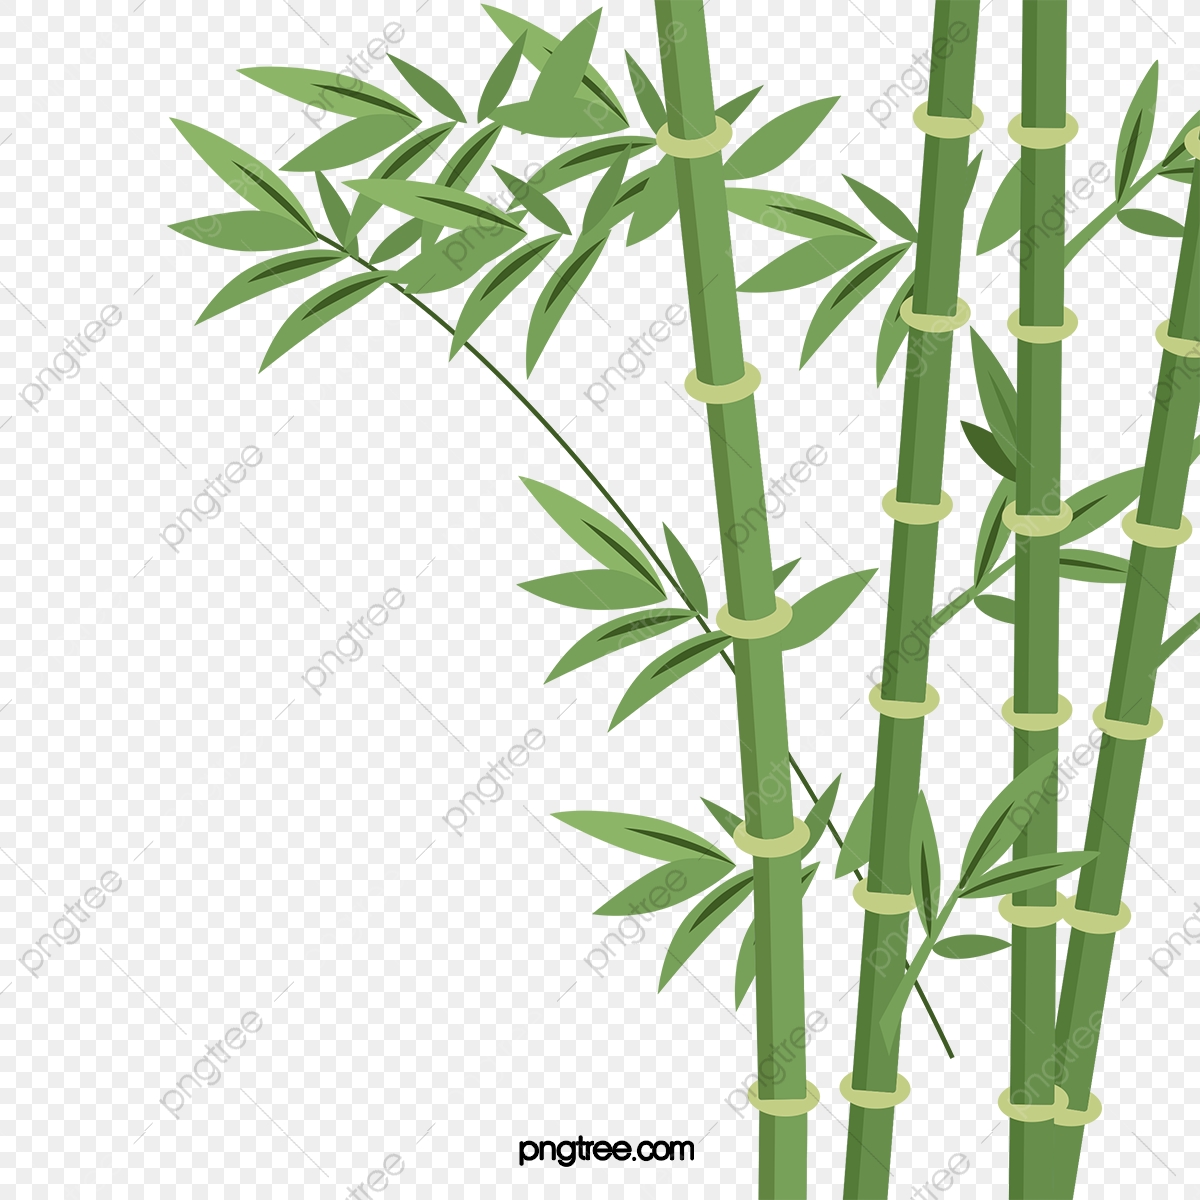 bamboo clipart cartoon